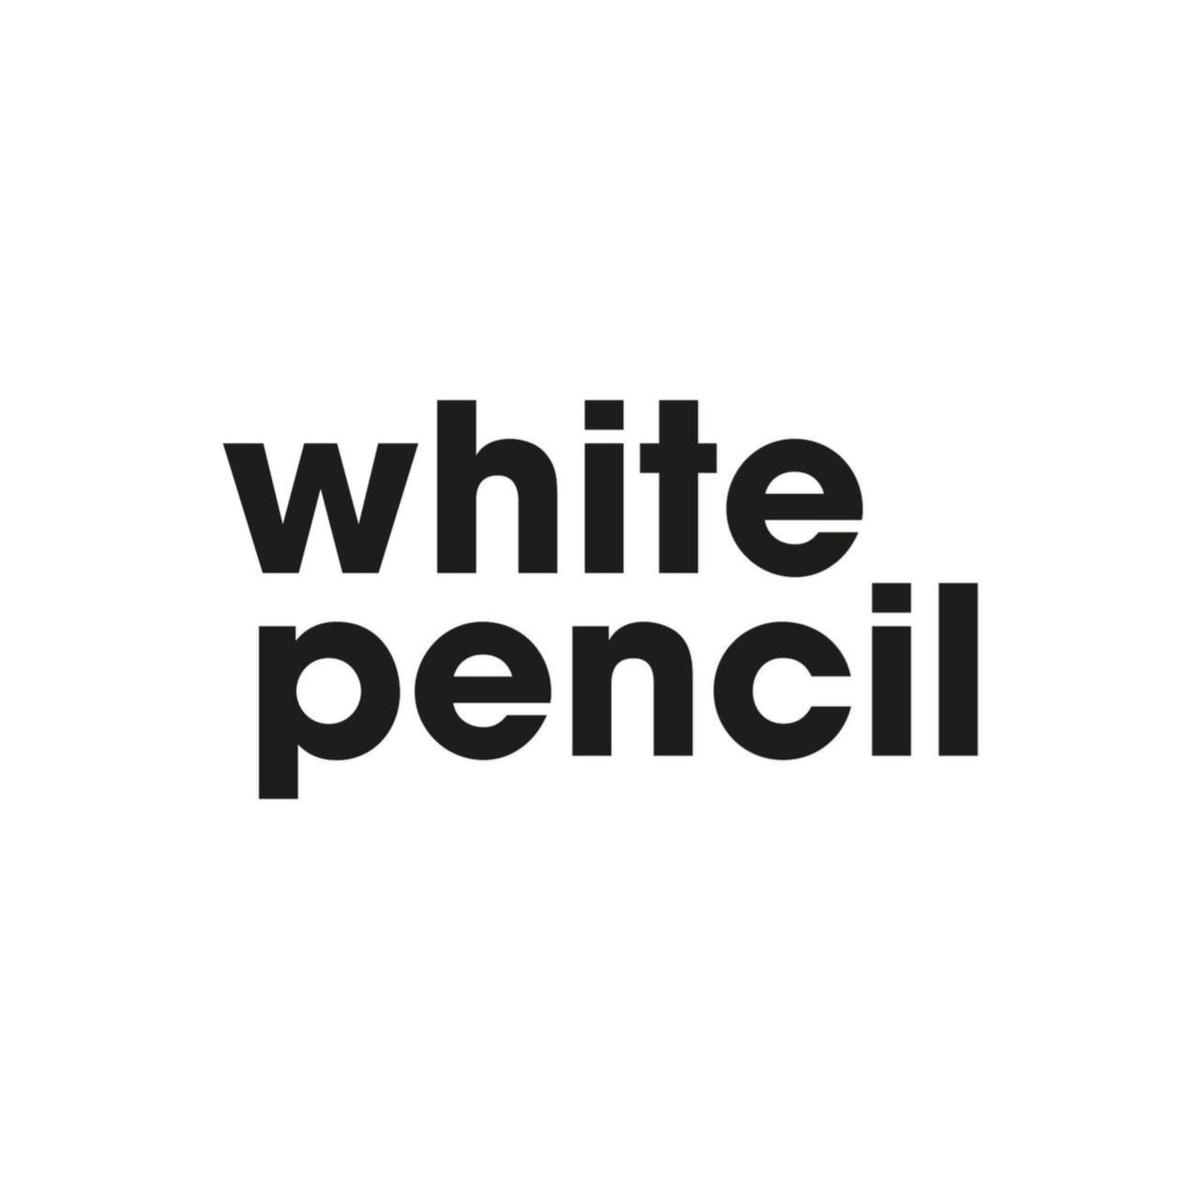 White Pencil's images